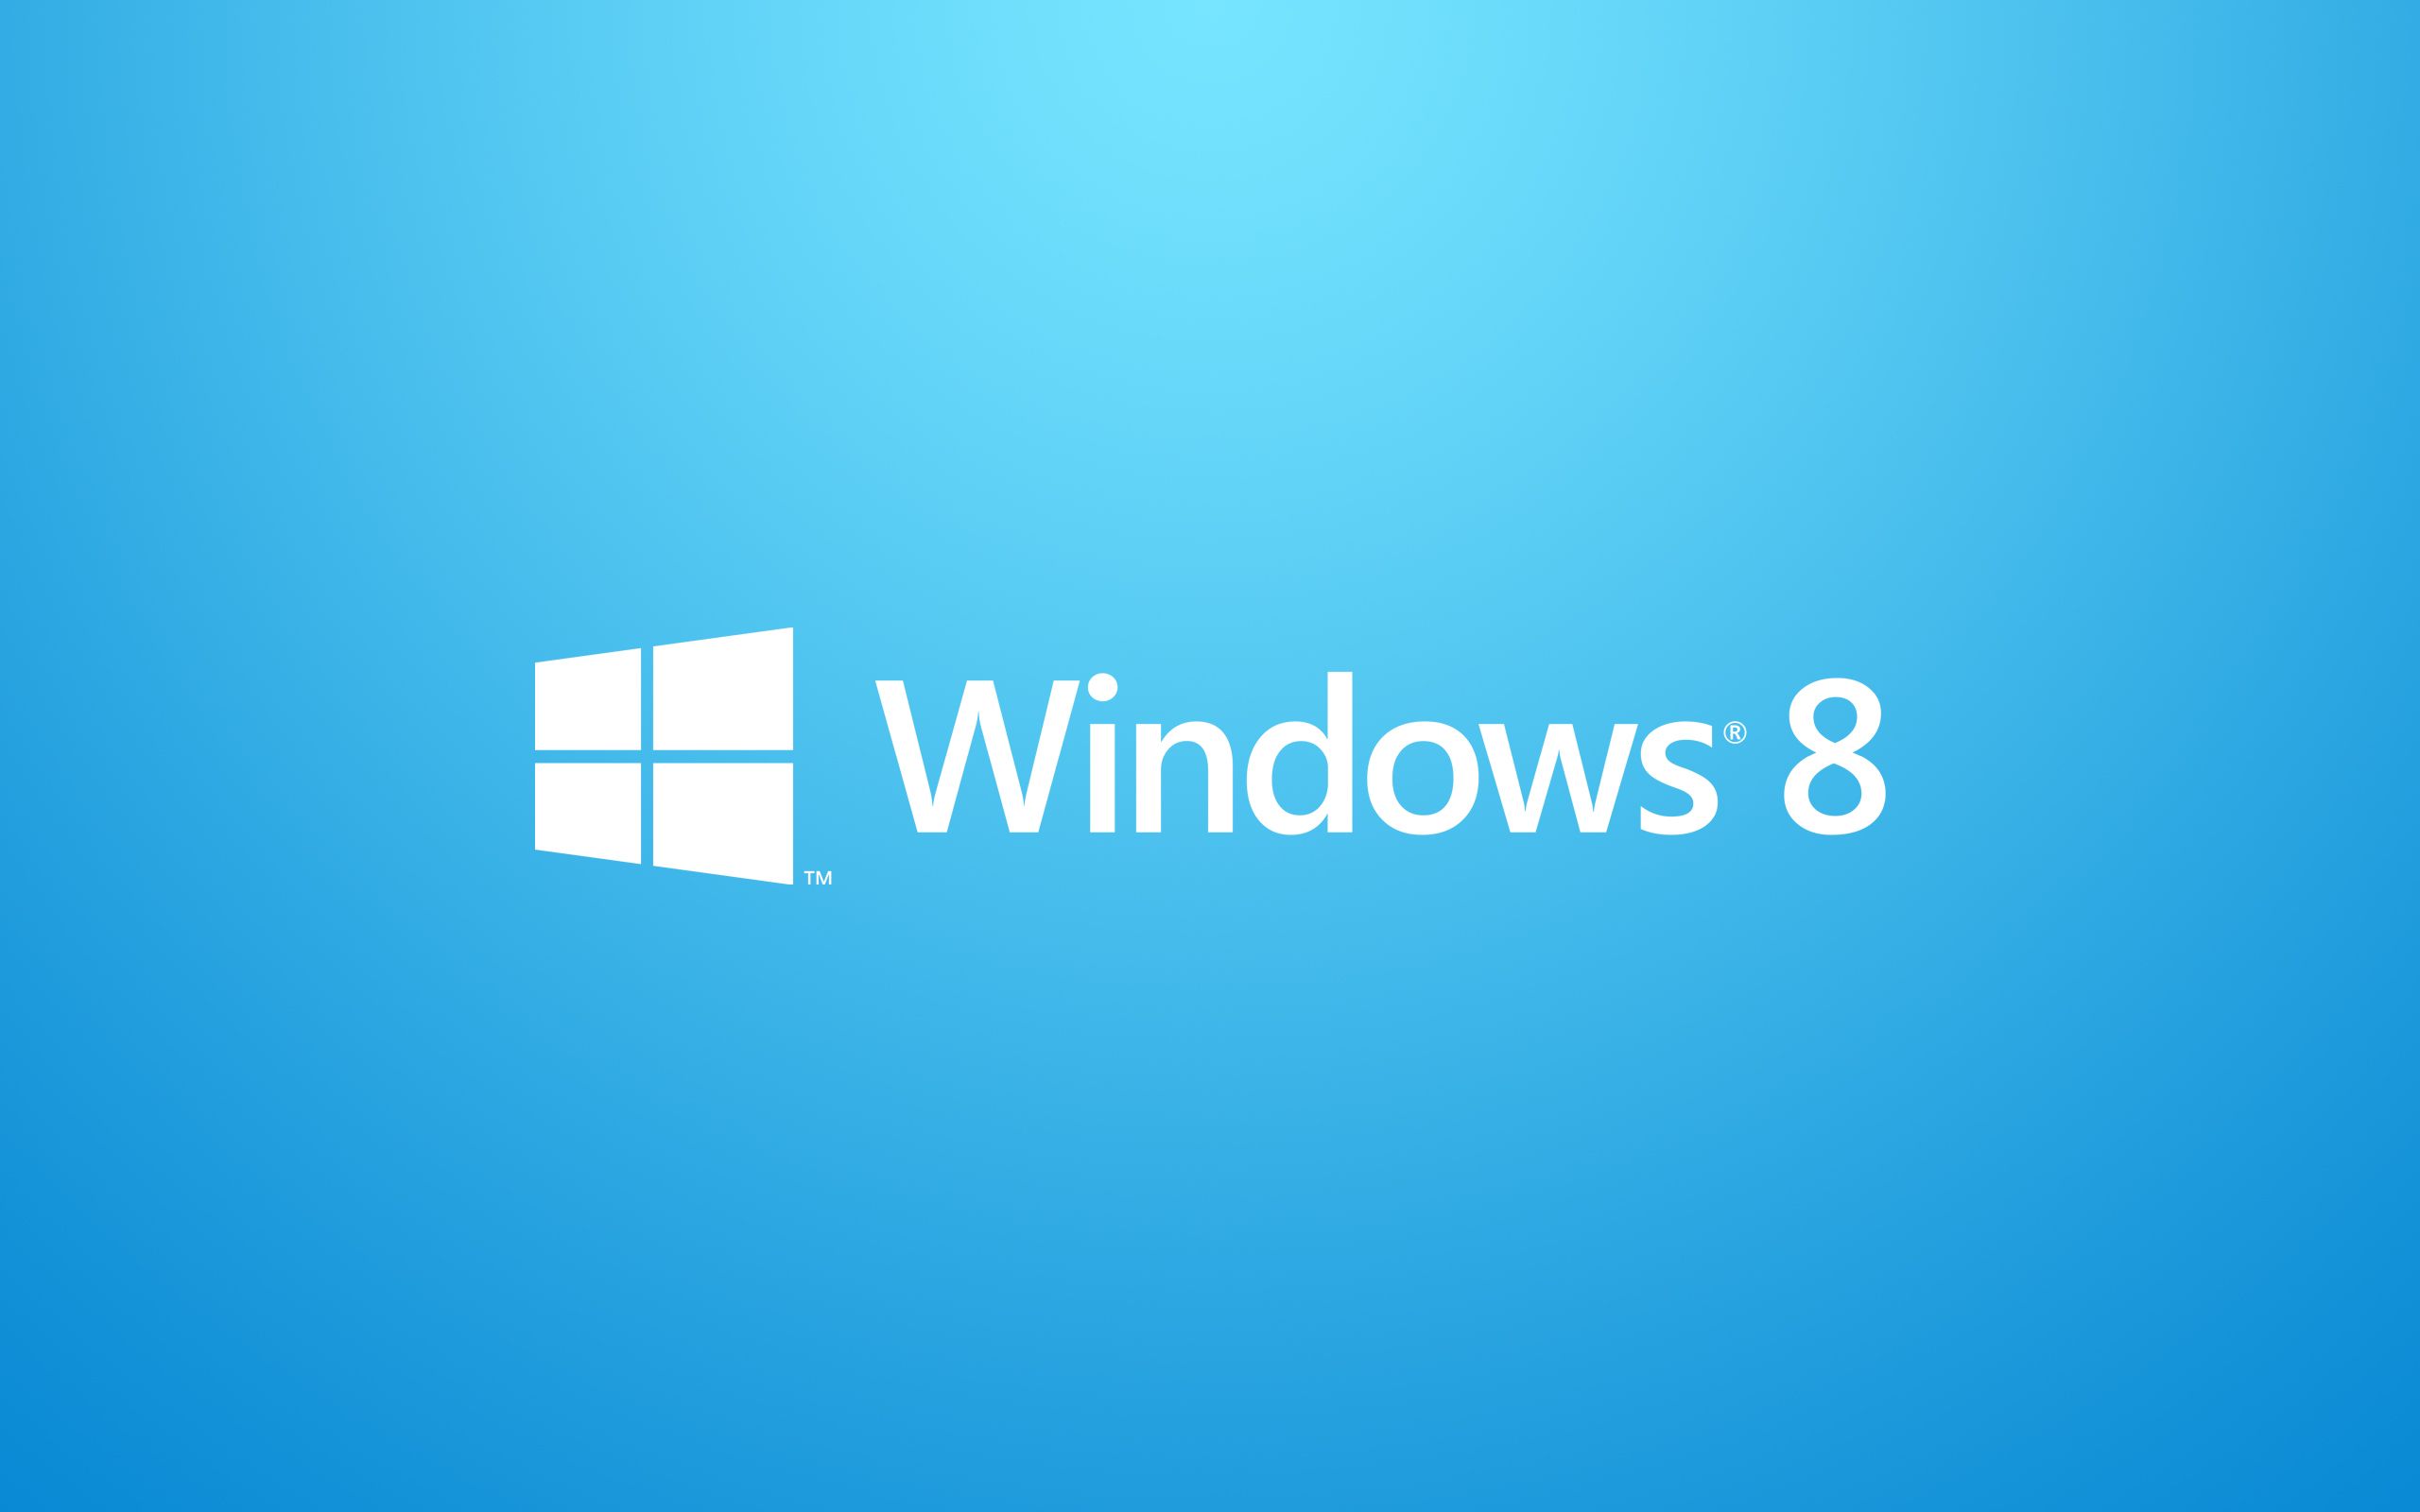 Windows 8 Hd Wallpapers ~ Toptenpack.com